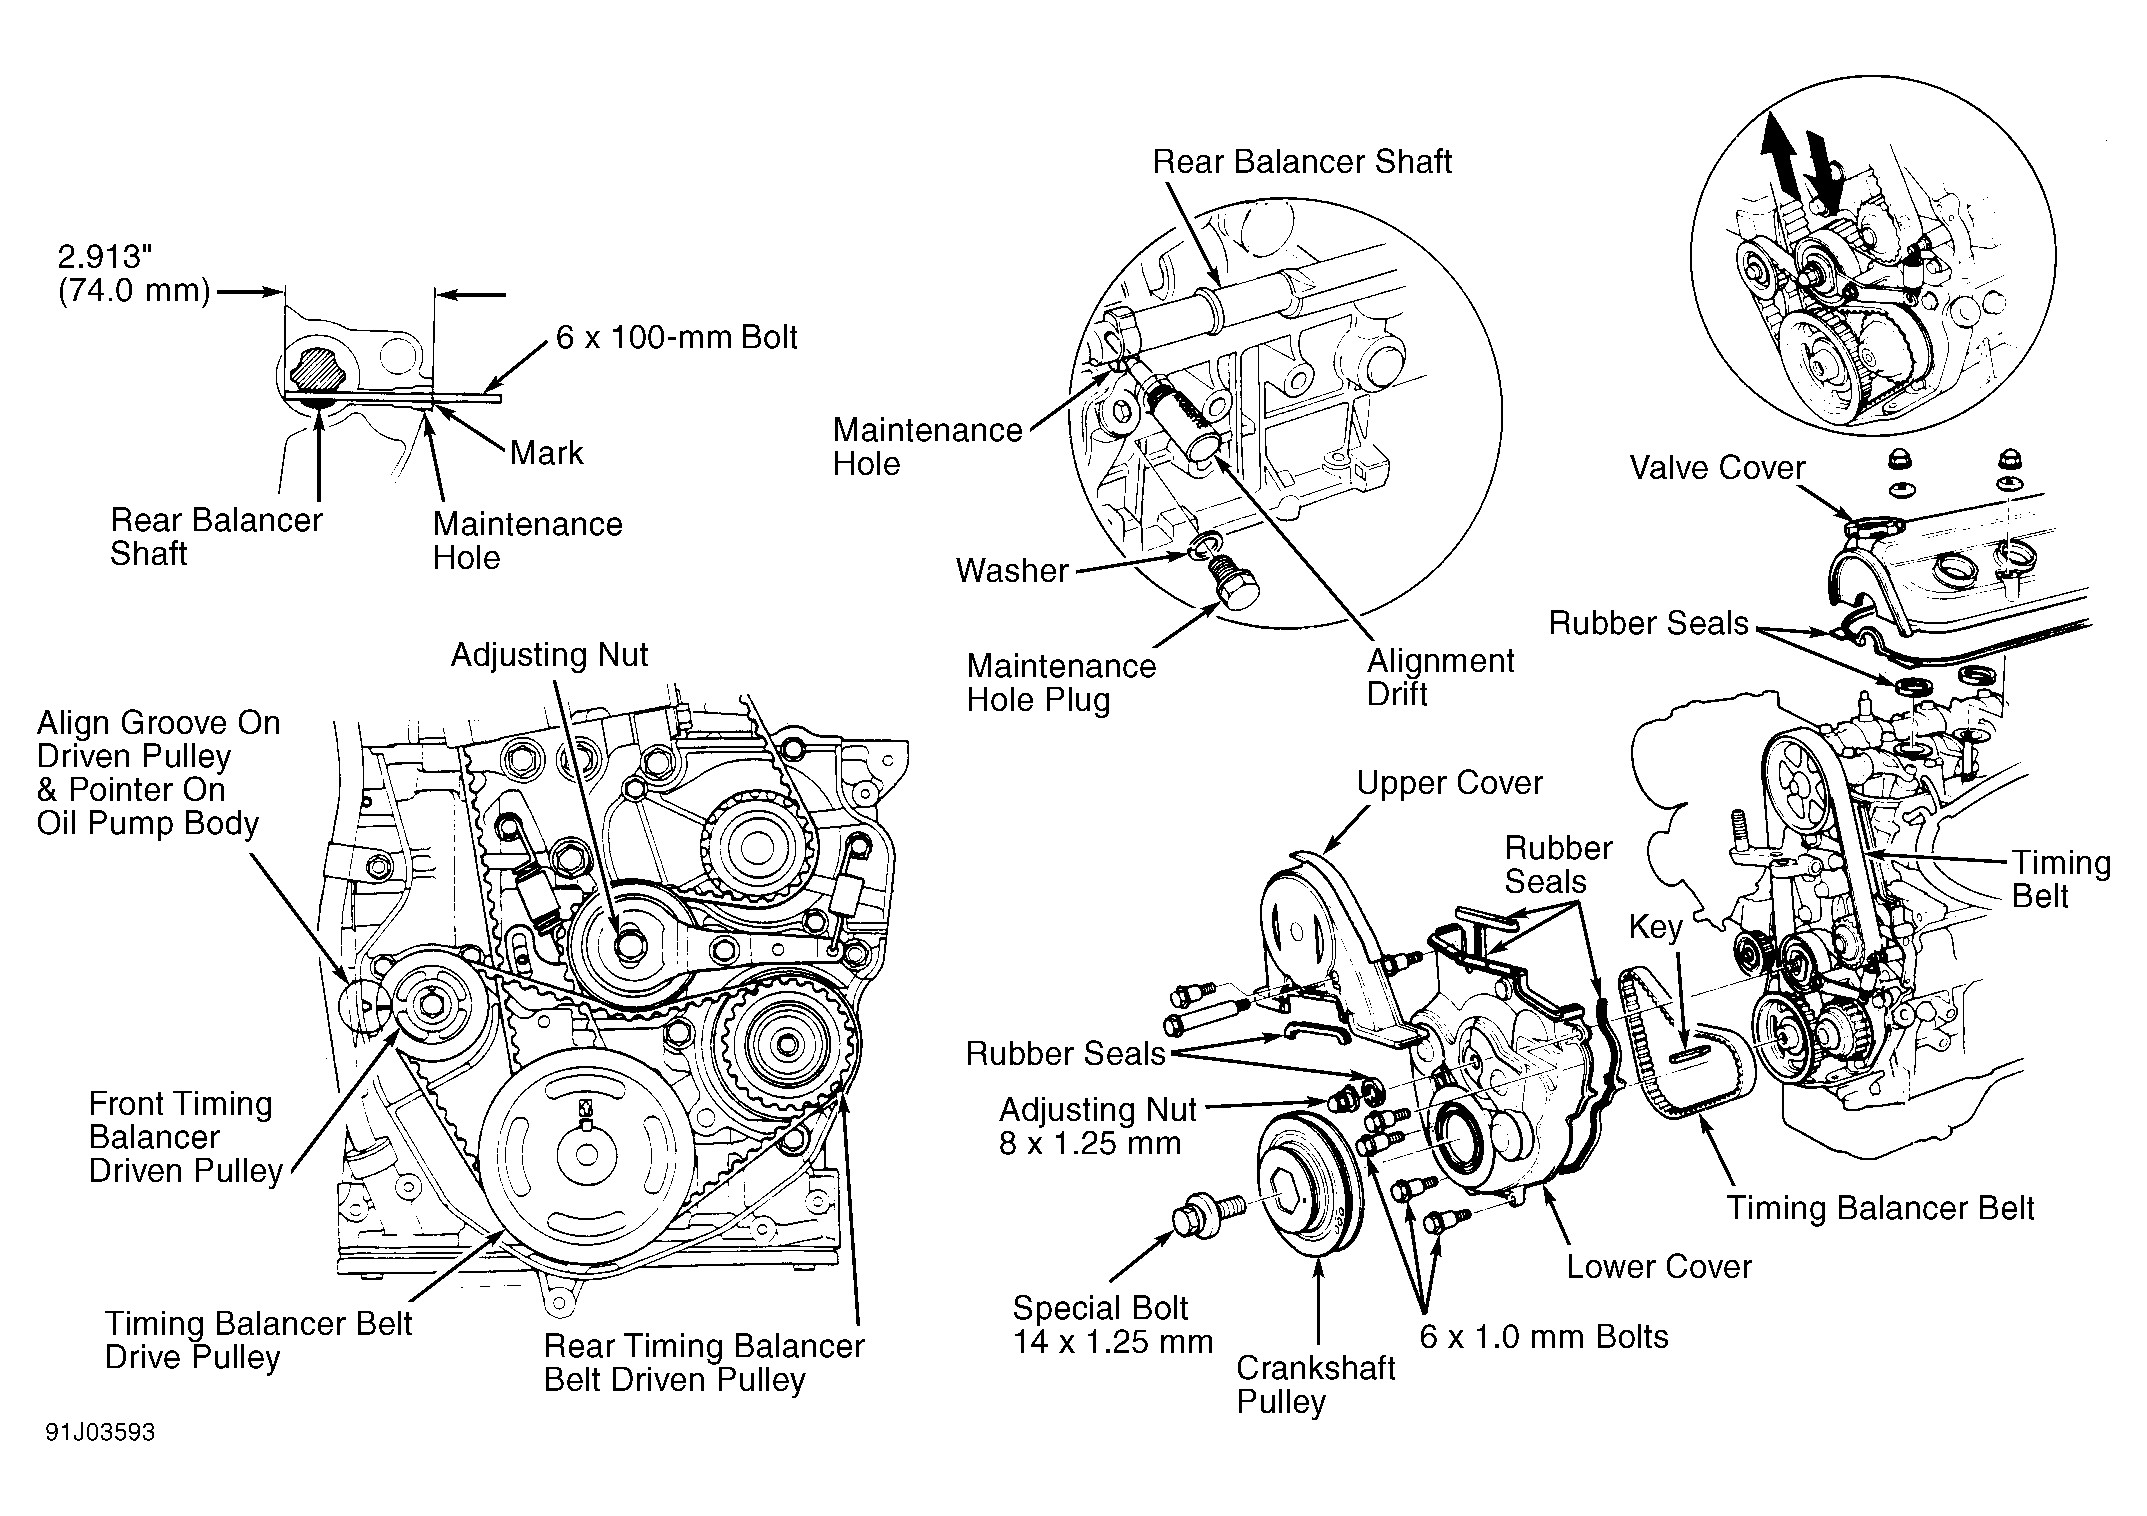 2000 Honda Accord V6 Engine Diagram 91 Honda Accord Fuse Box Of 2000 Honda Accord V6 Engine Diagram